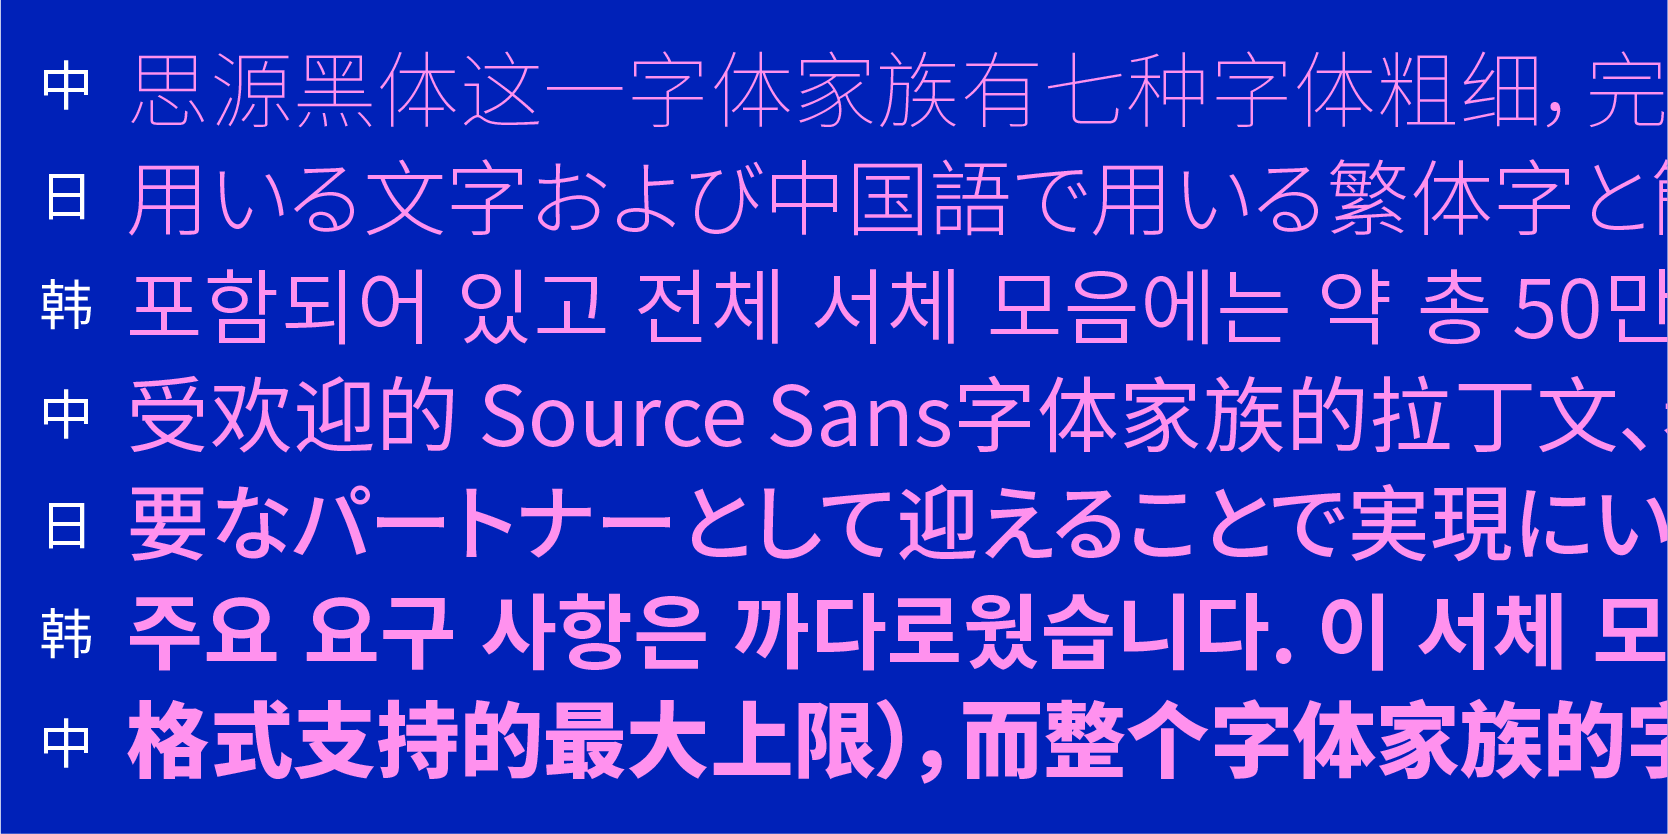 Card displaying Source Han Sans CJK Korean typeface in various styles